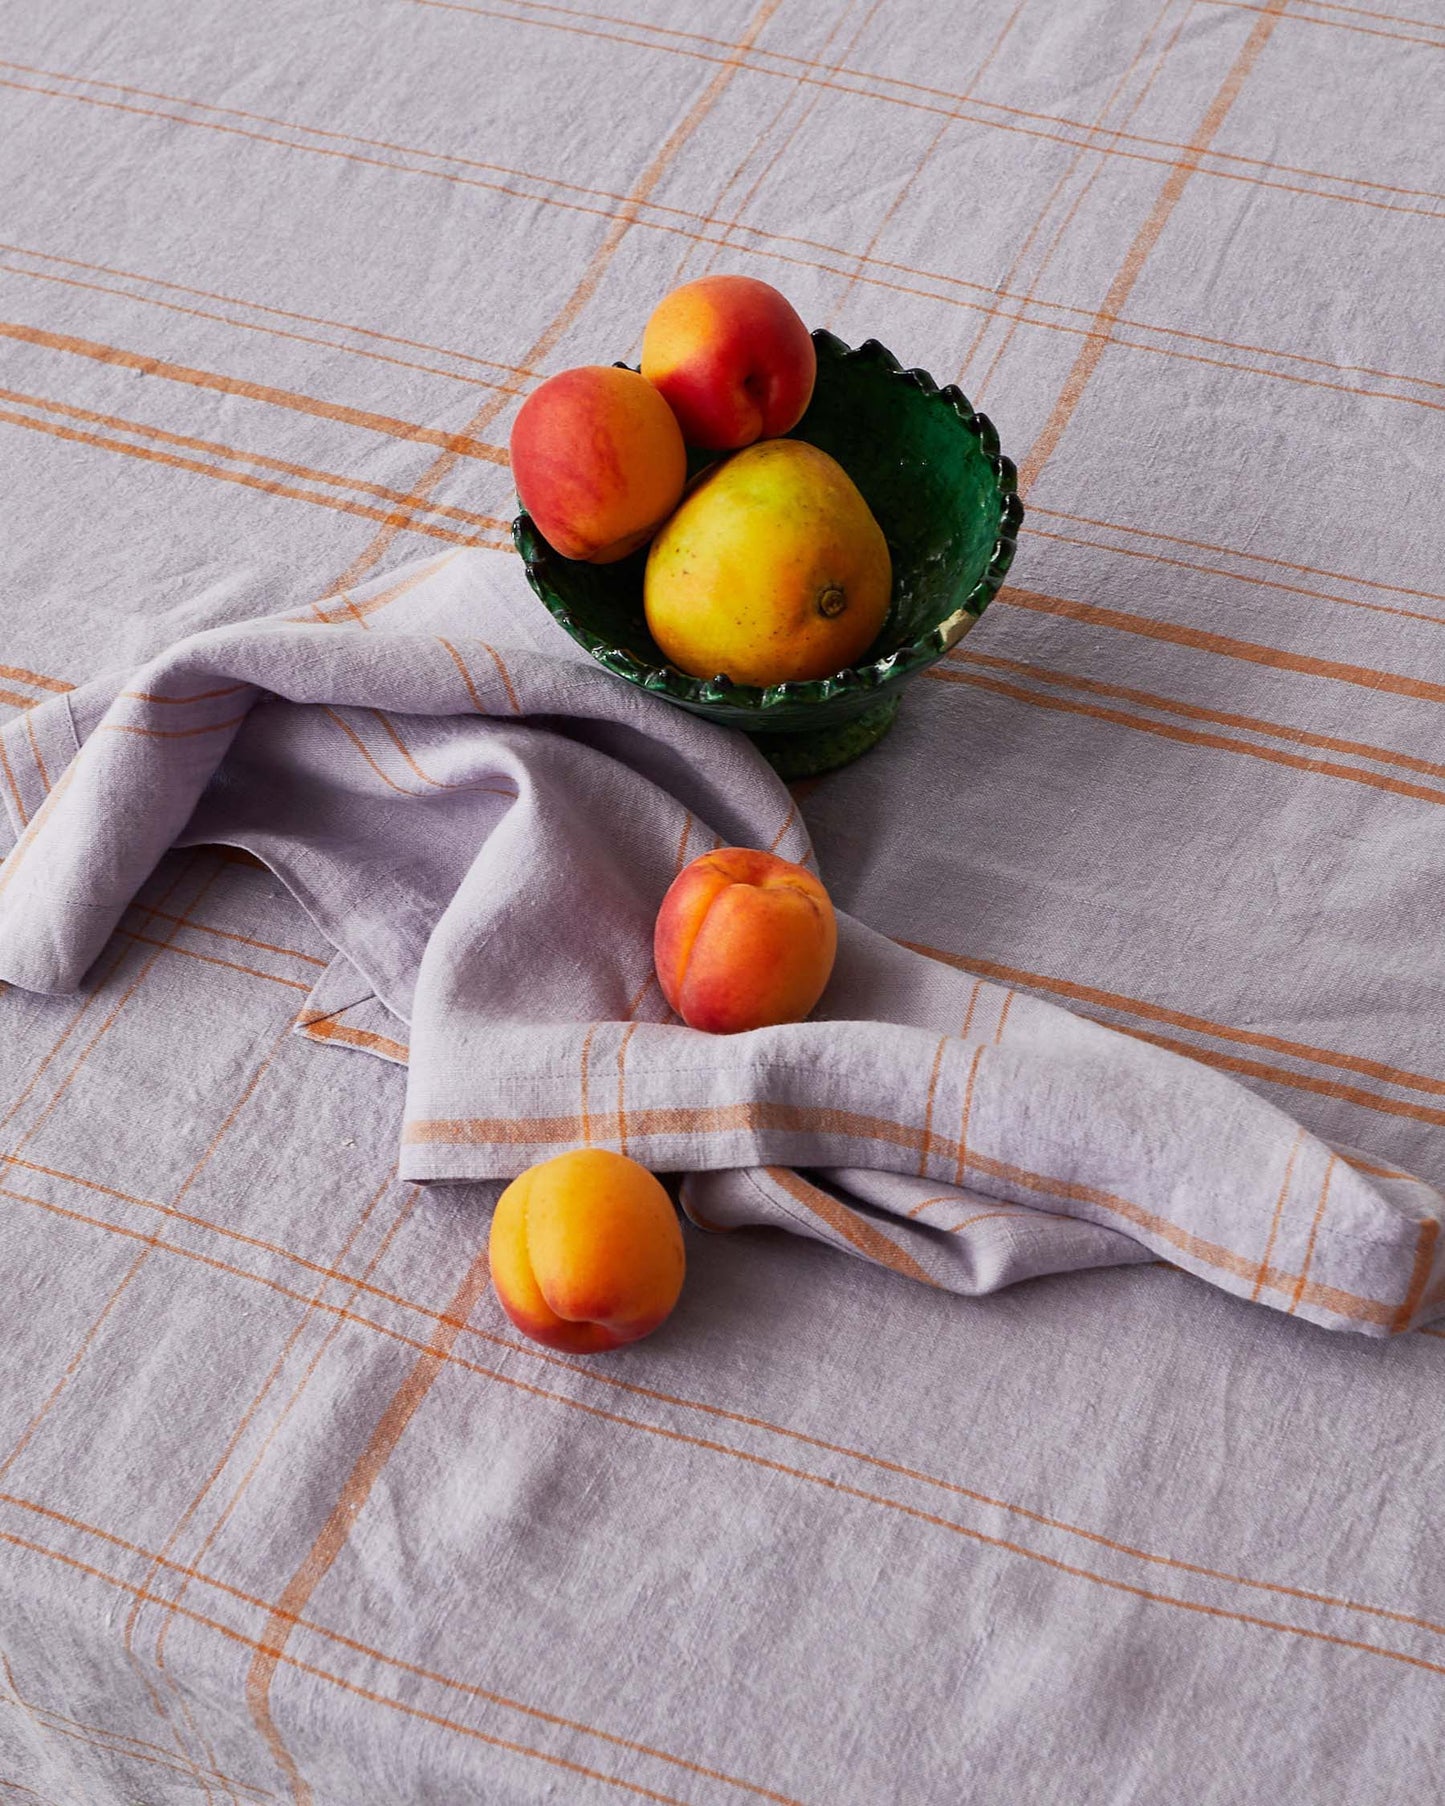 Kip & Co - Santa Monica Tartan Linen Tablecloth